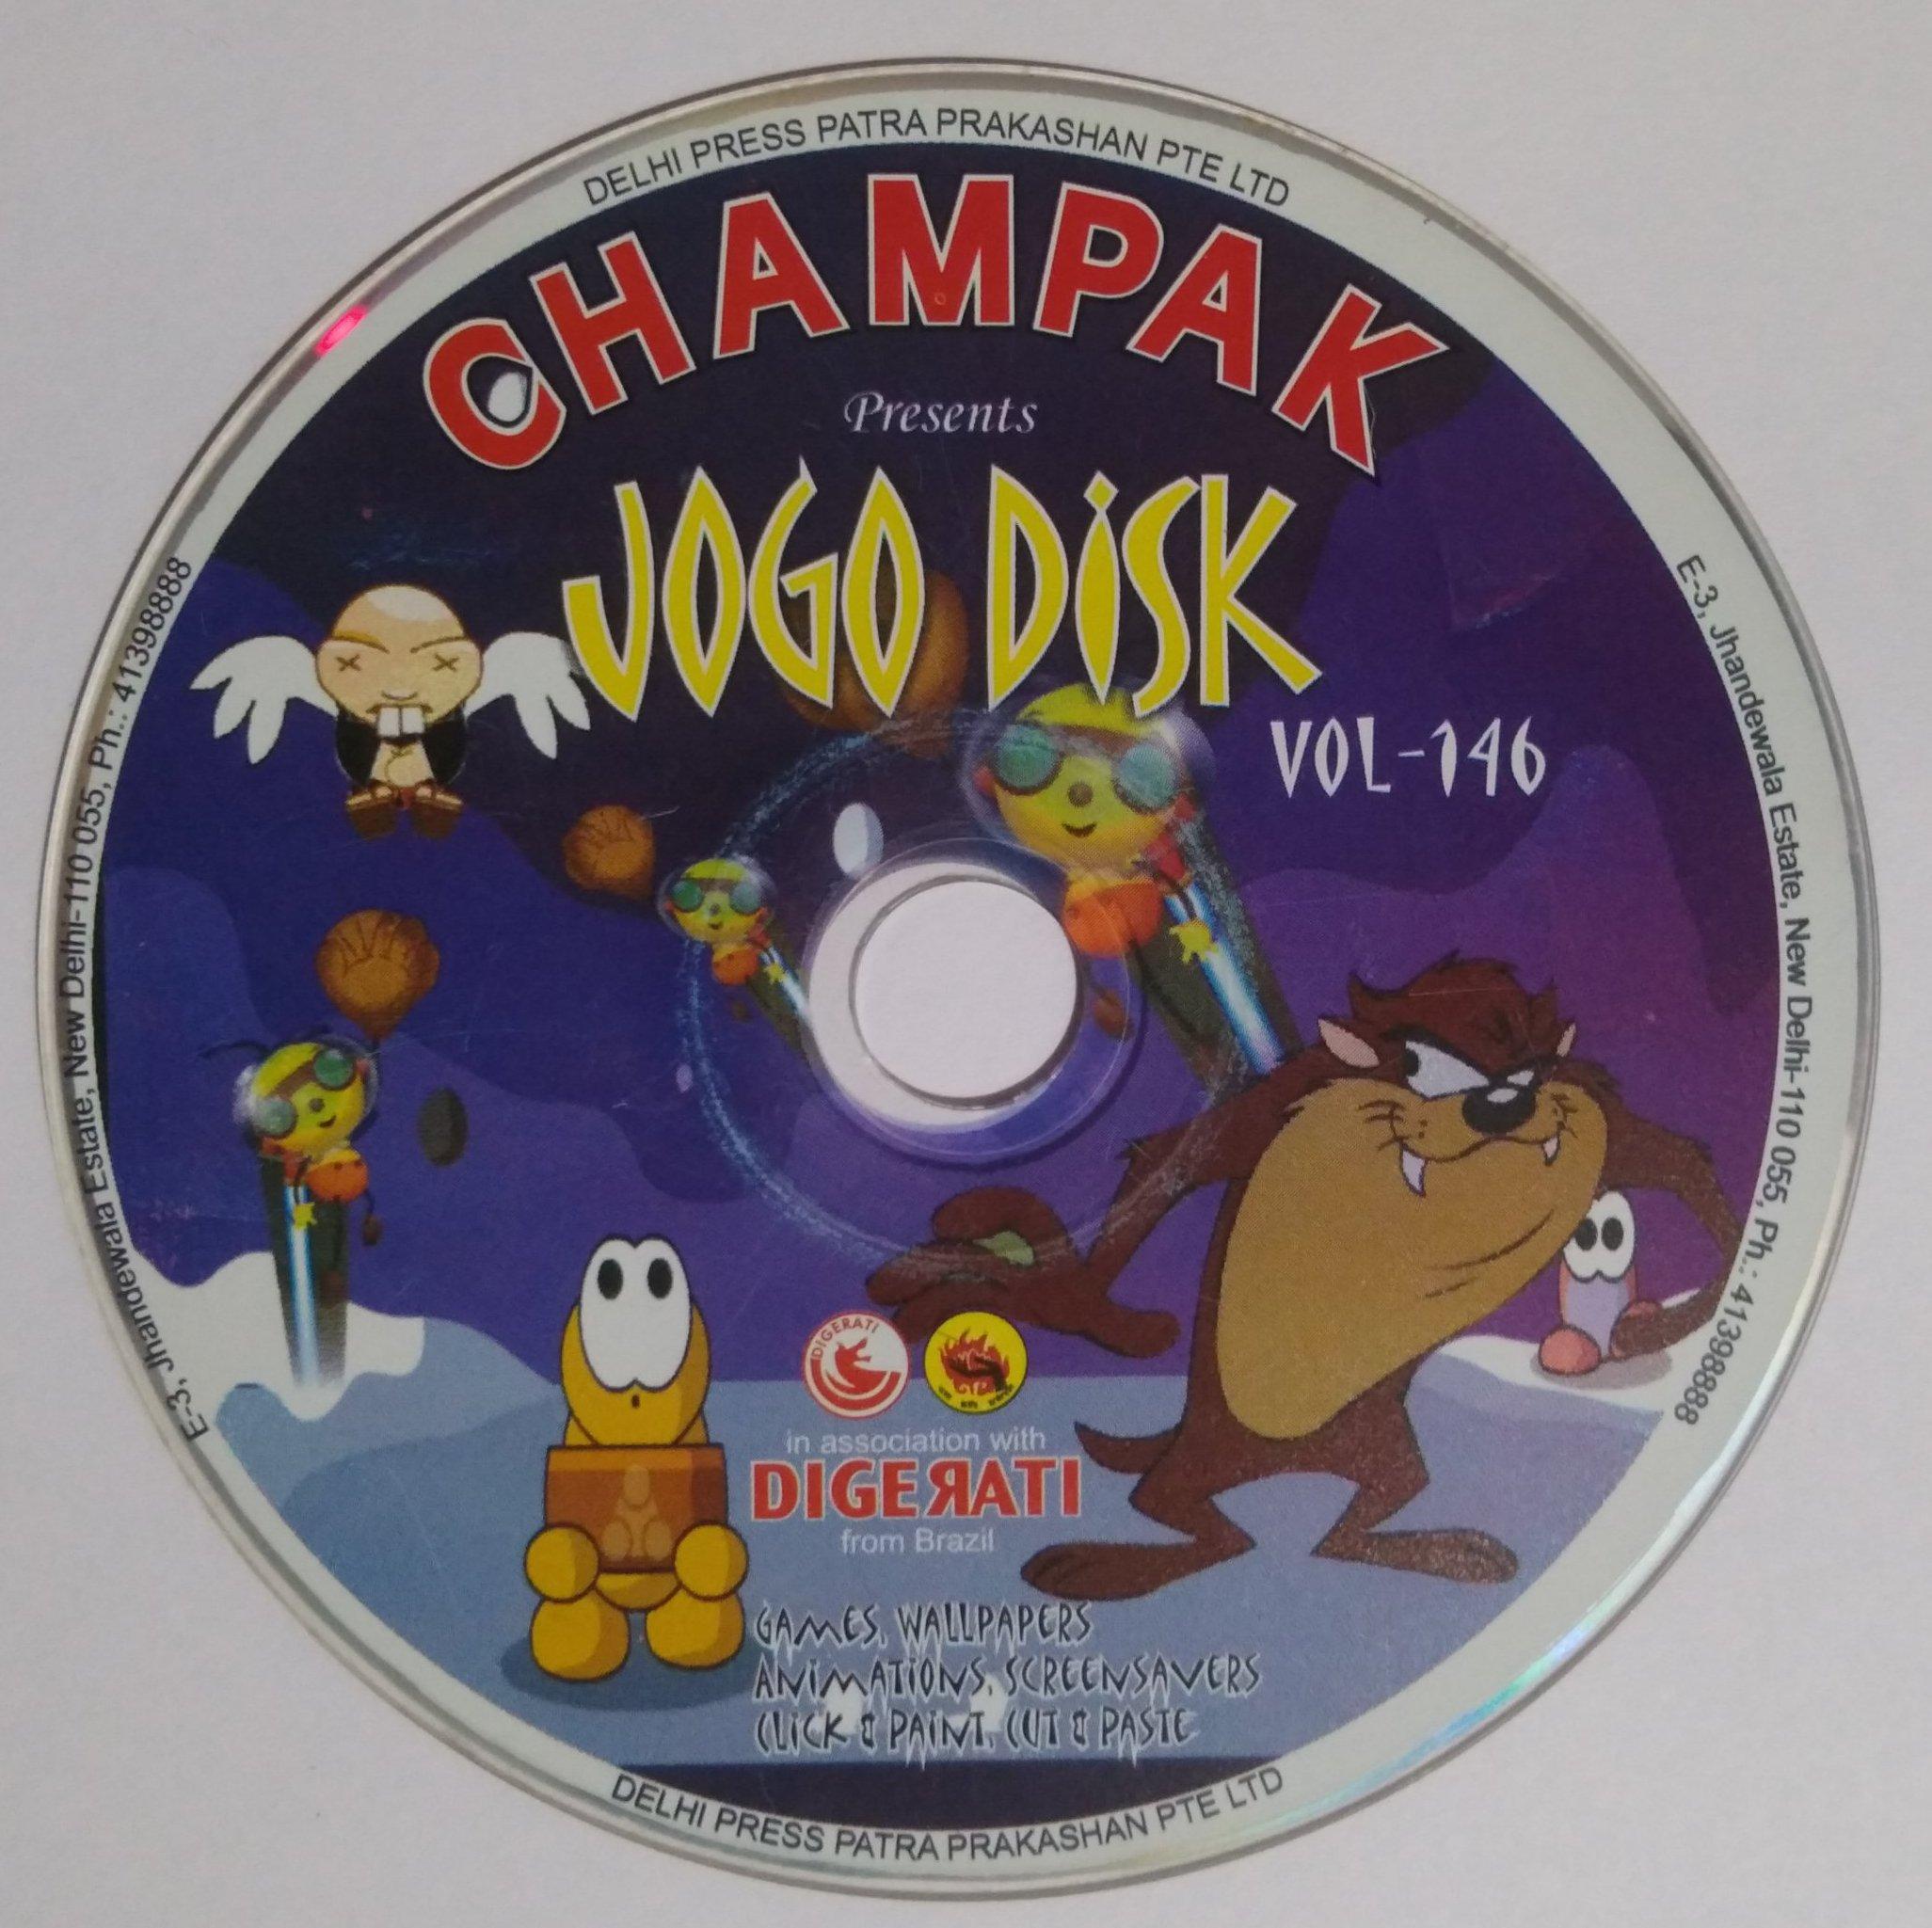 Champak/Digerati Jogo Disk Volume 132 : Free Download, Borrow, and  Streaming : Internet Archive